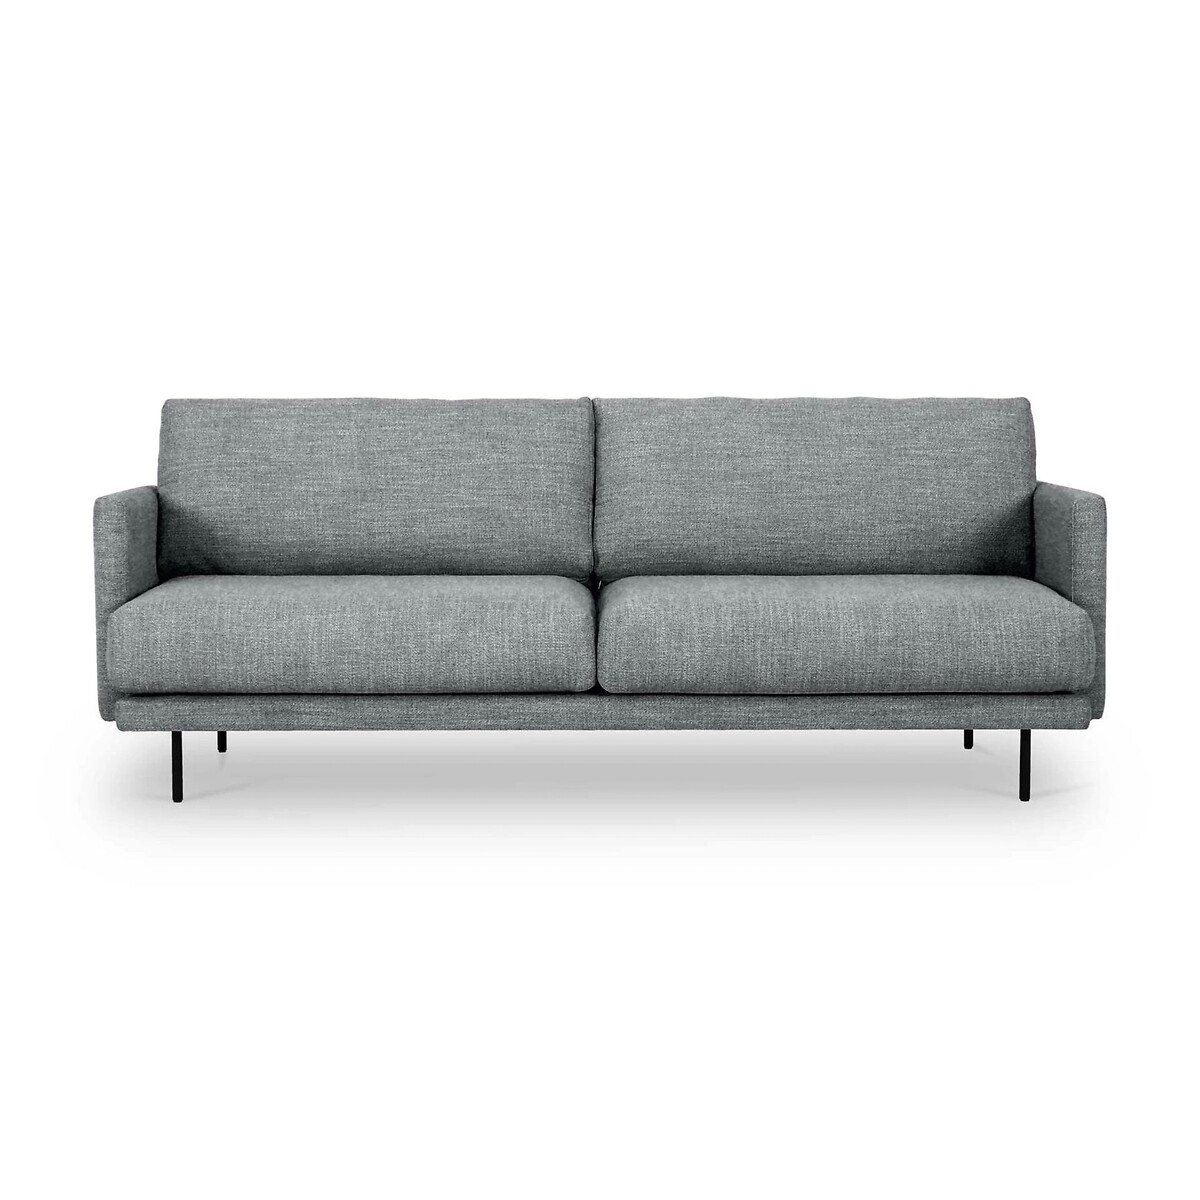 Диван Ricadi трехместный 3 мест. серый диван трехместный duresta watson 95x280x103